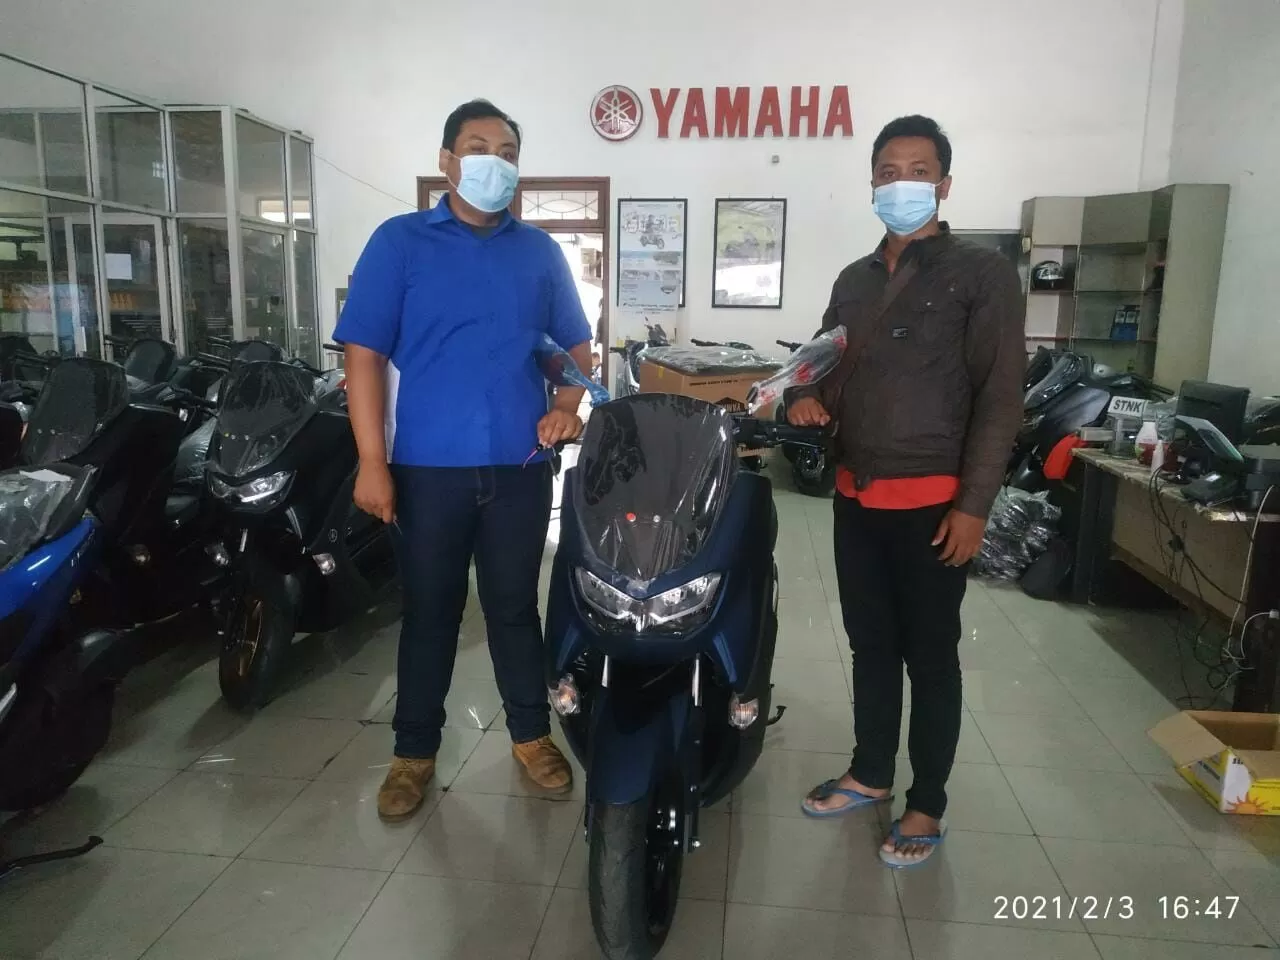 Testimoni pembelian unit motor Motor Yamaha Surabaya Webportal Marketing Sepeda Motor Indonesia